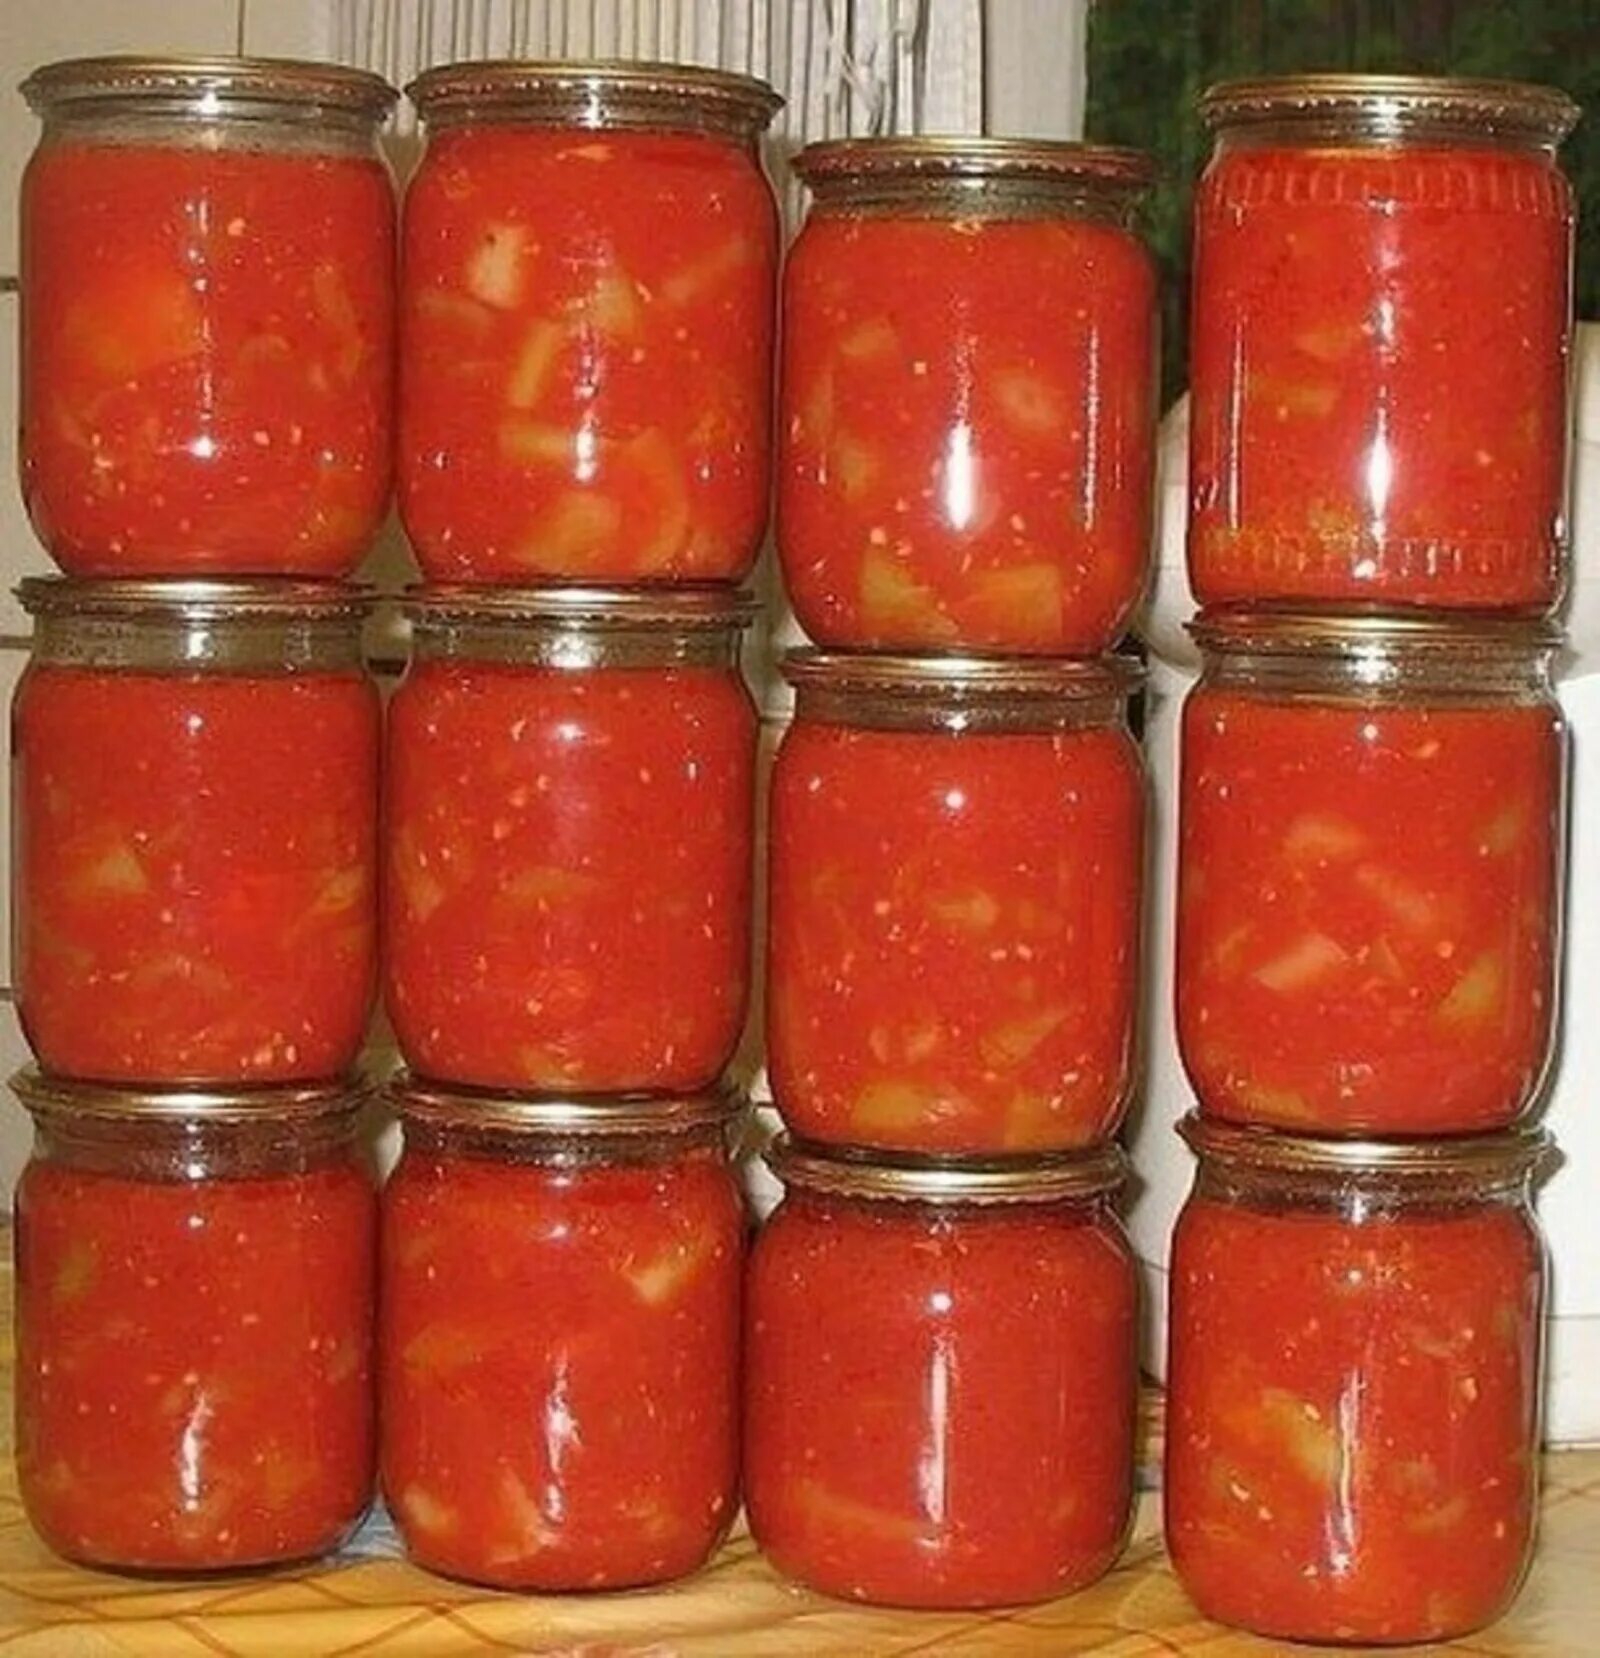 1 кг перца 1 кг помидор. Лечо на 3 кг помидор. Лечо на 4 кг перца и 4 кг помидор. Лечо по-болгарски на зиму. «Домашние заготовки», лечо,520.